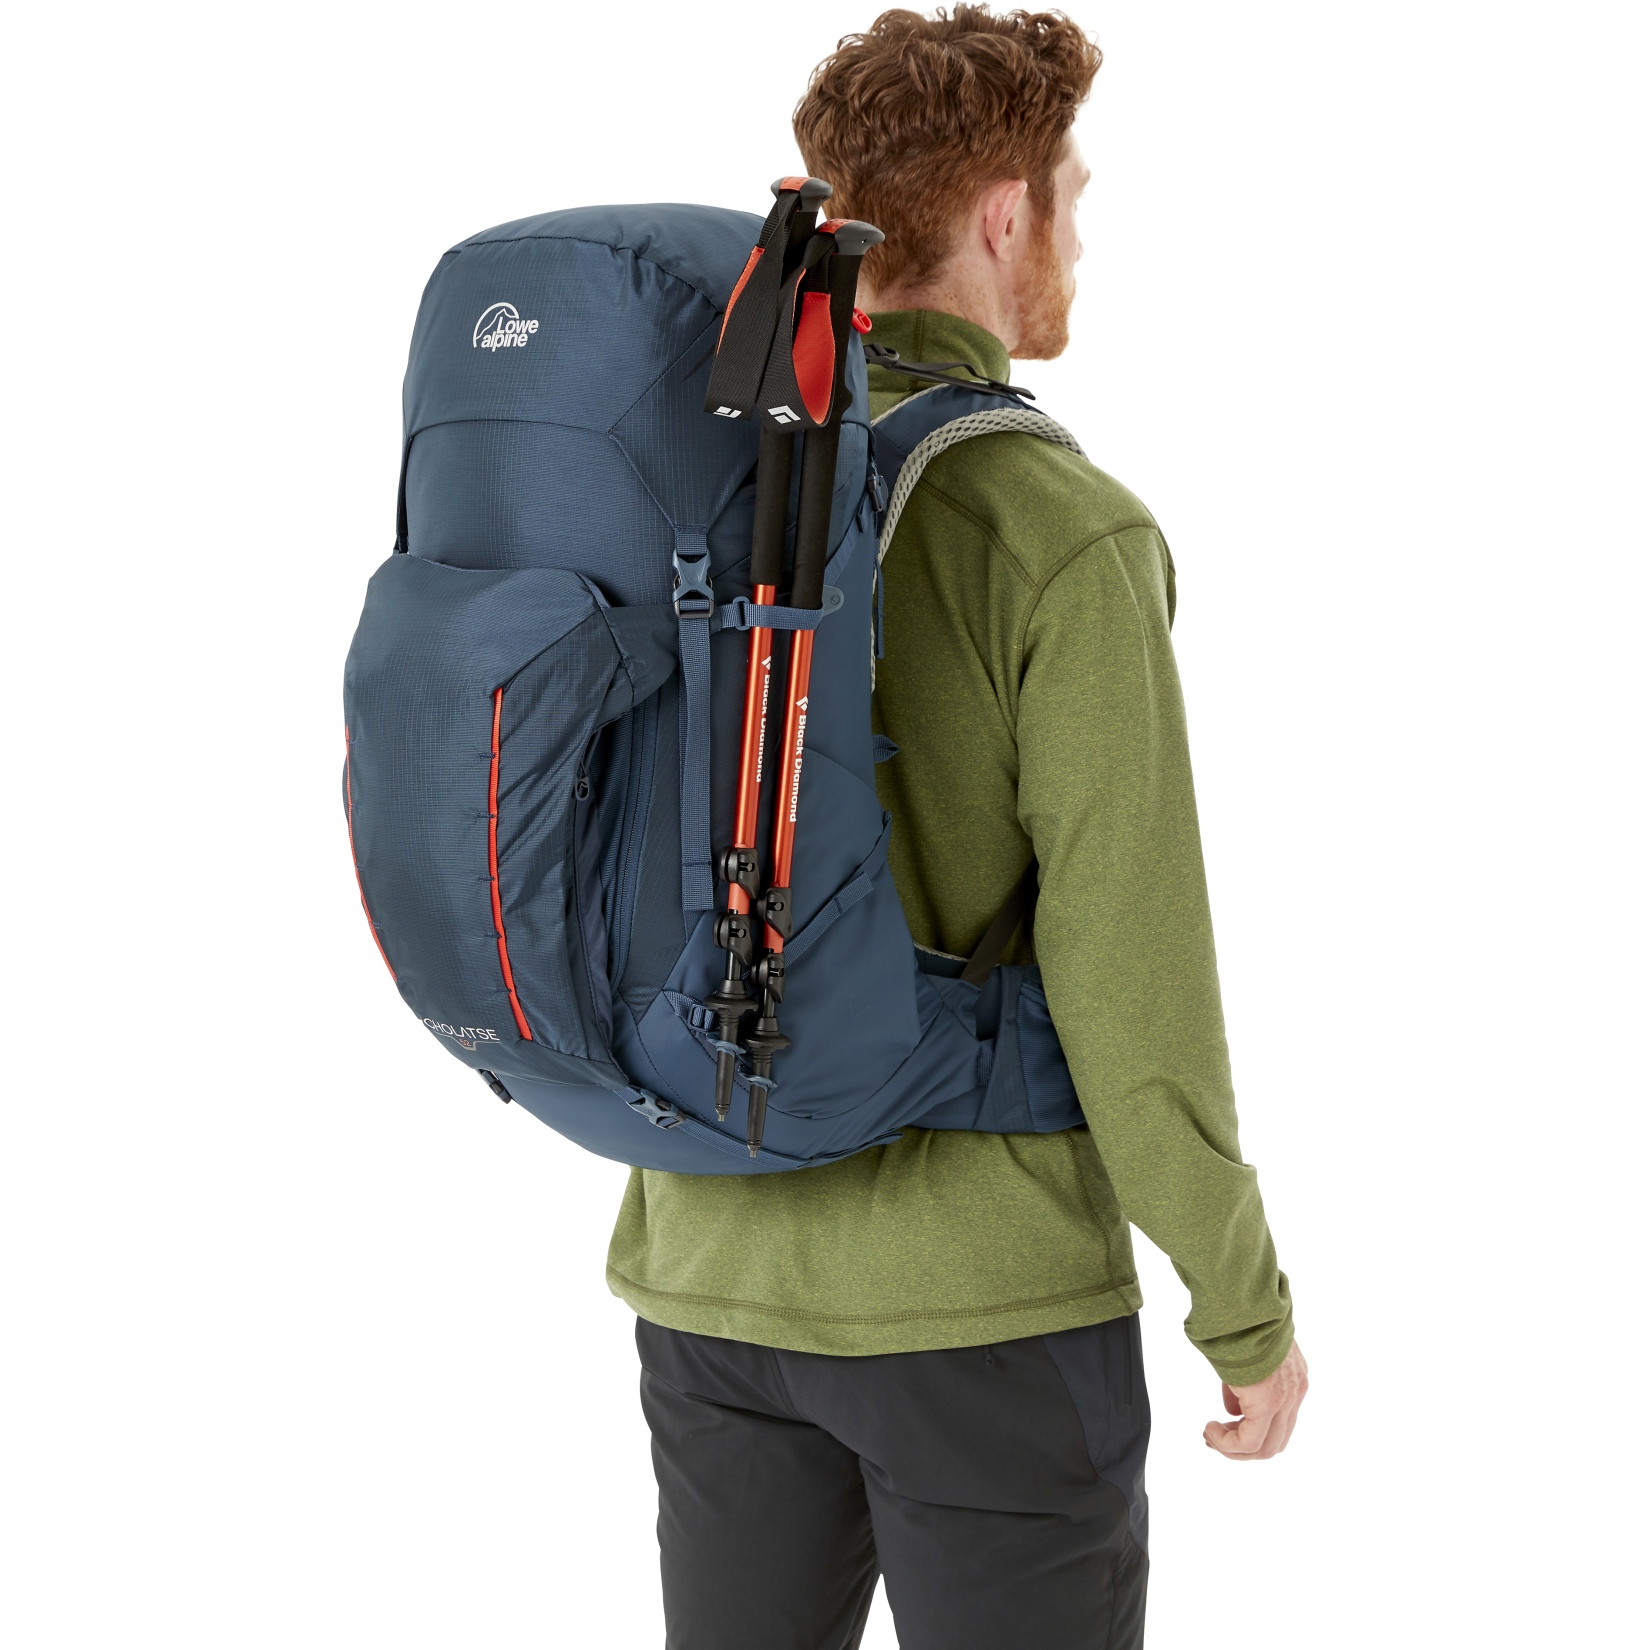 Lowe Alpine Cholatse 52:57L Backpack - L/XL - Black